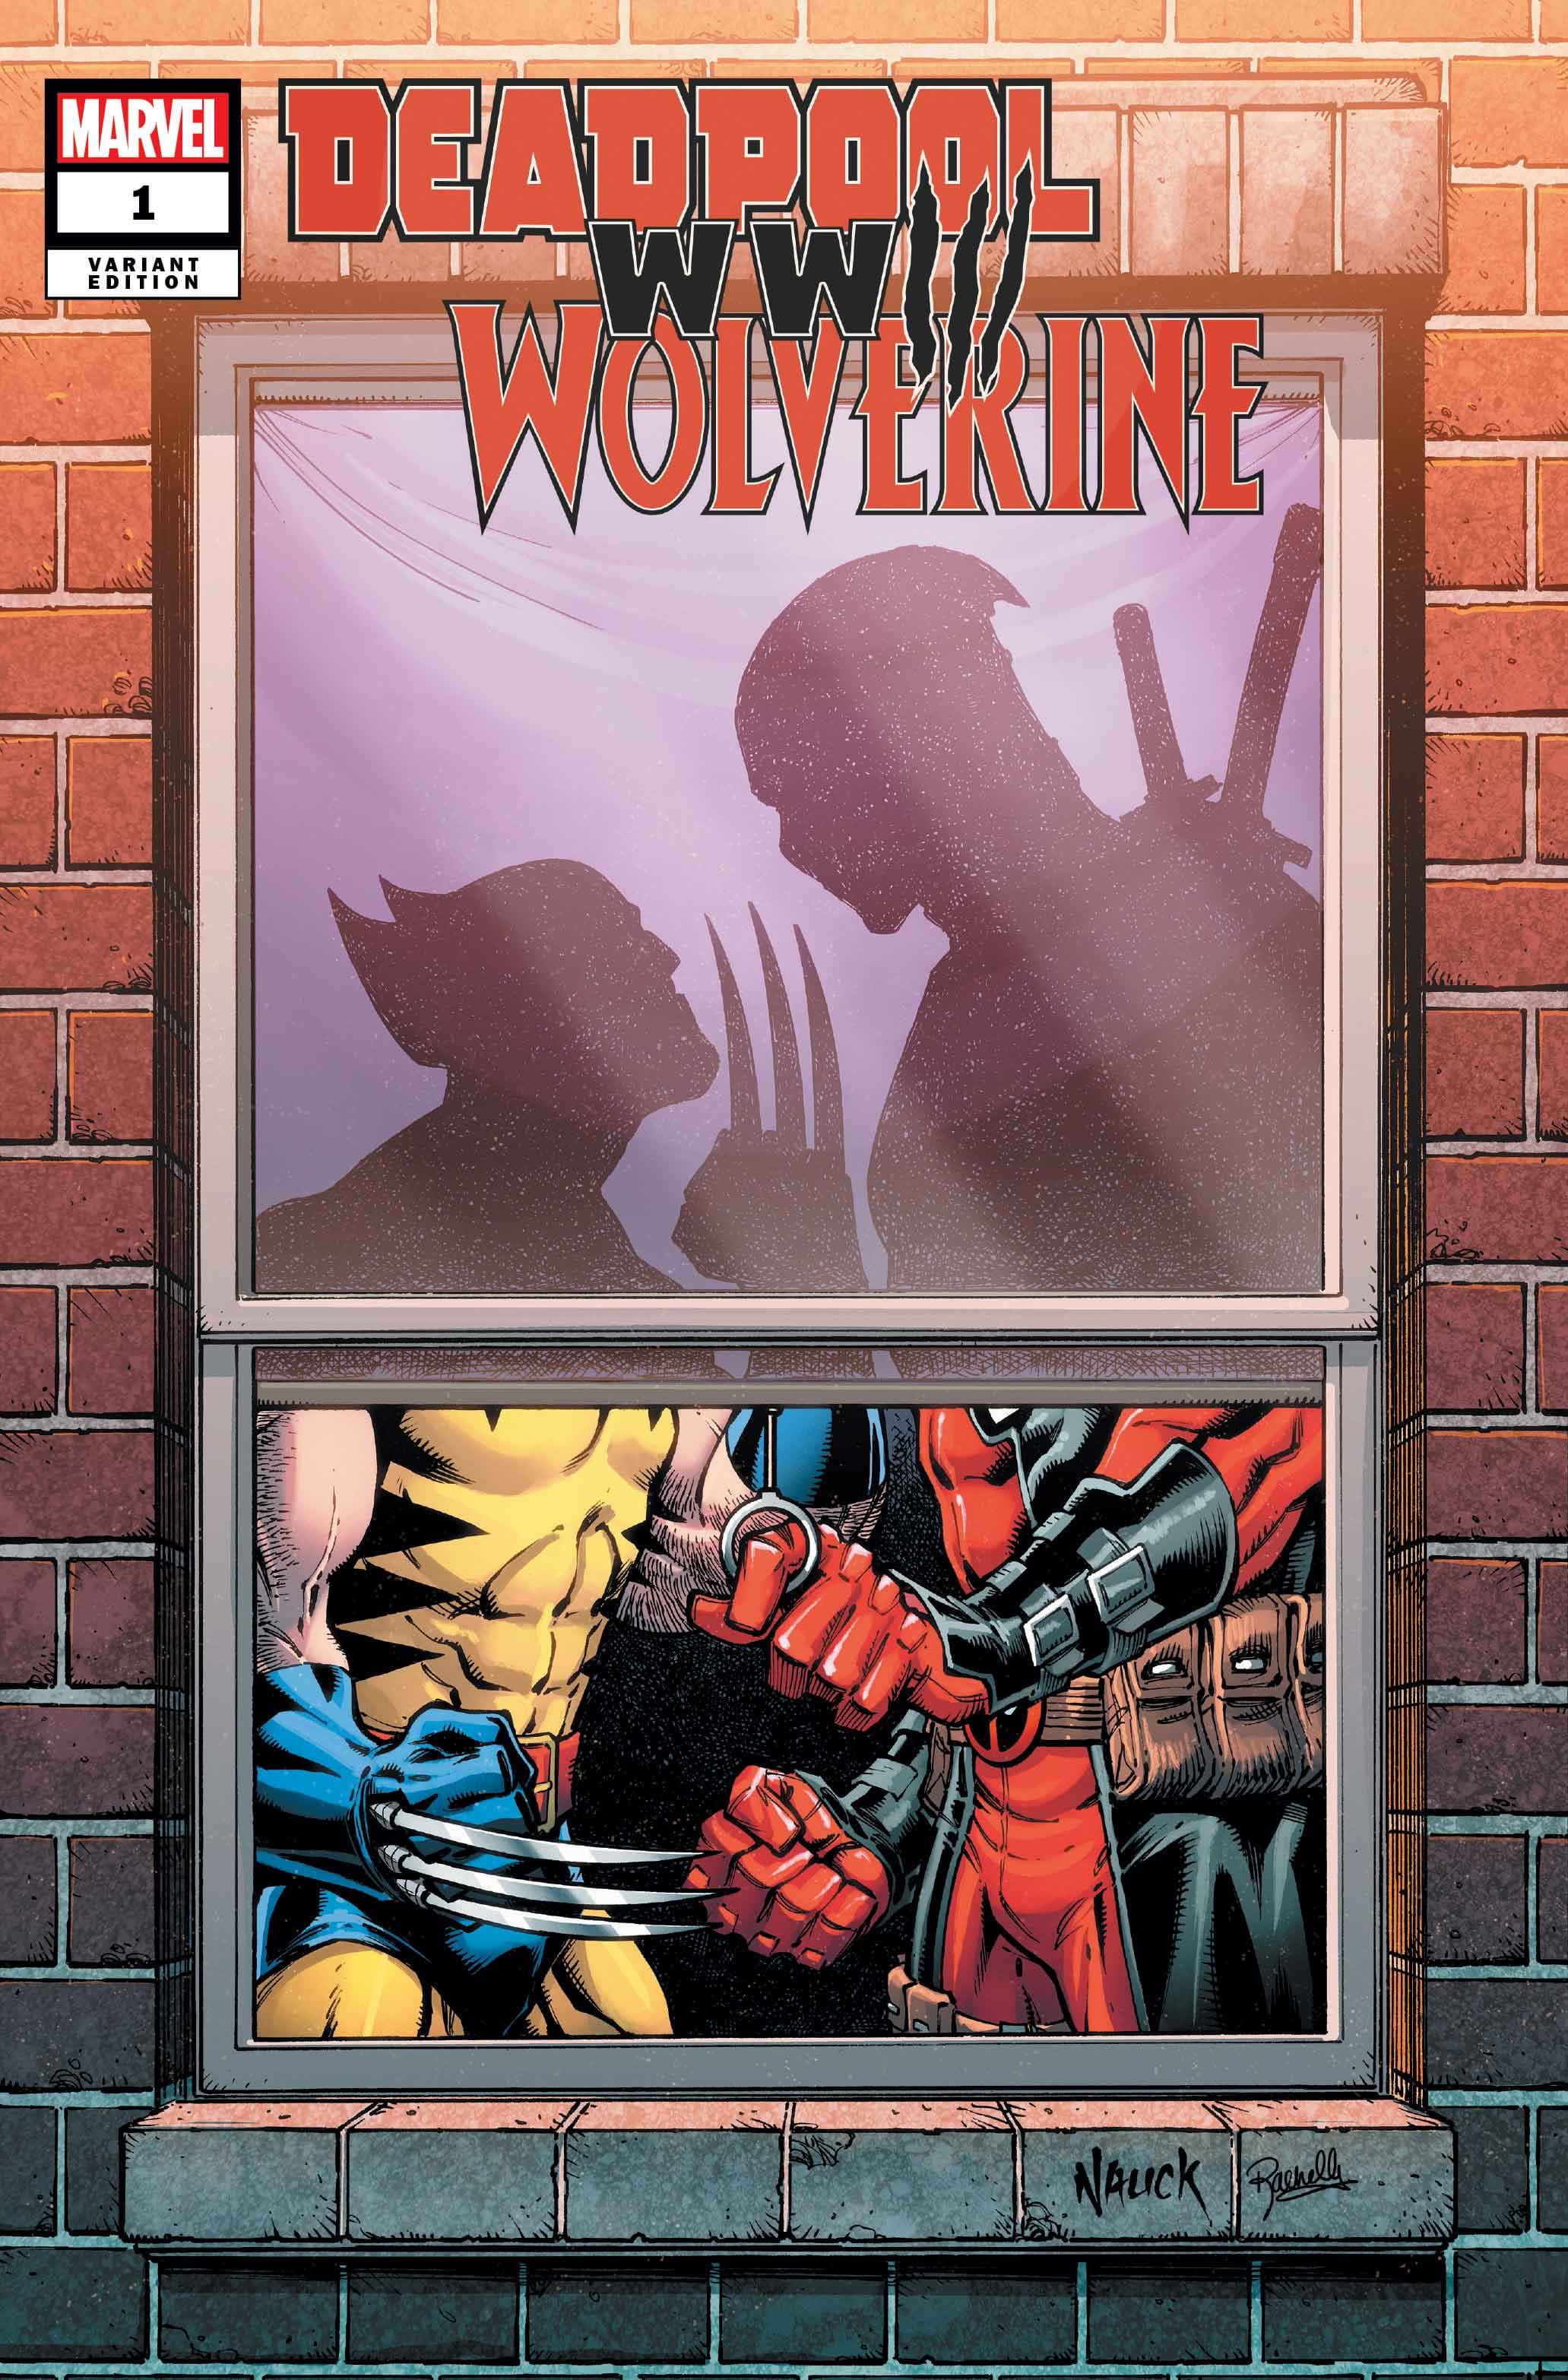 Marvel anuncia nova HQ de Wolverine e Deadpool 